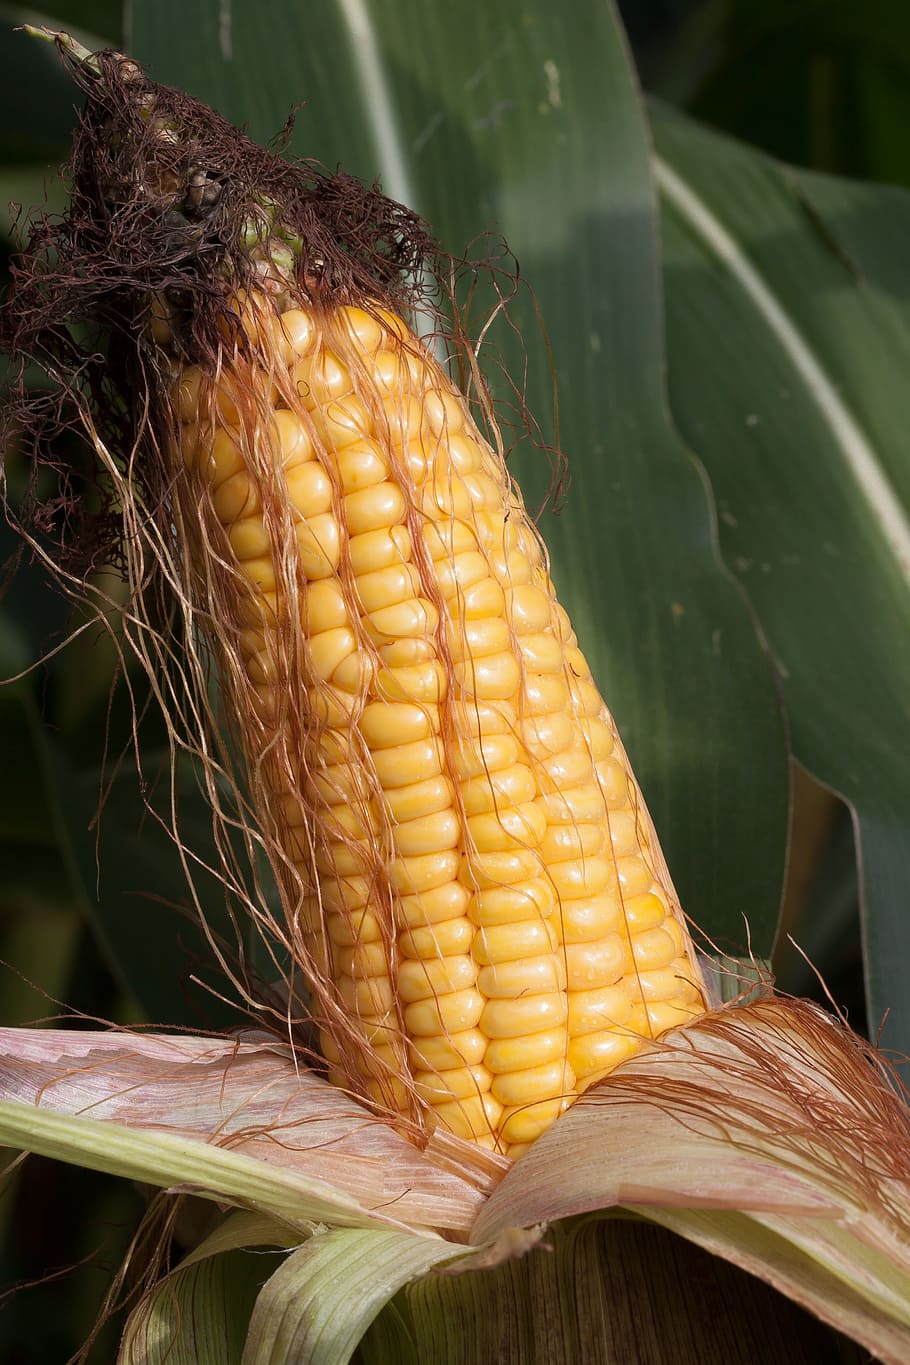 corn on the cob, corn, zea mays, cereals, food, autumn, kukuruz, culture of maize, ripe, public record